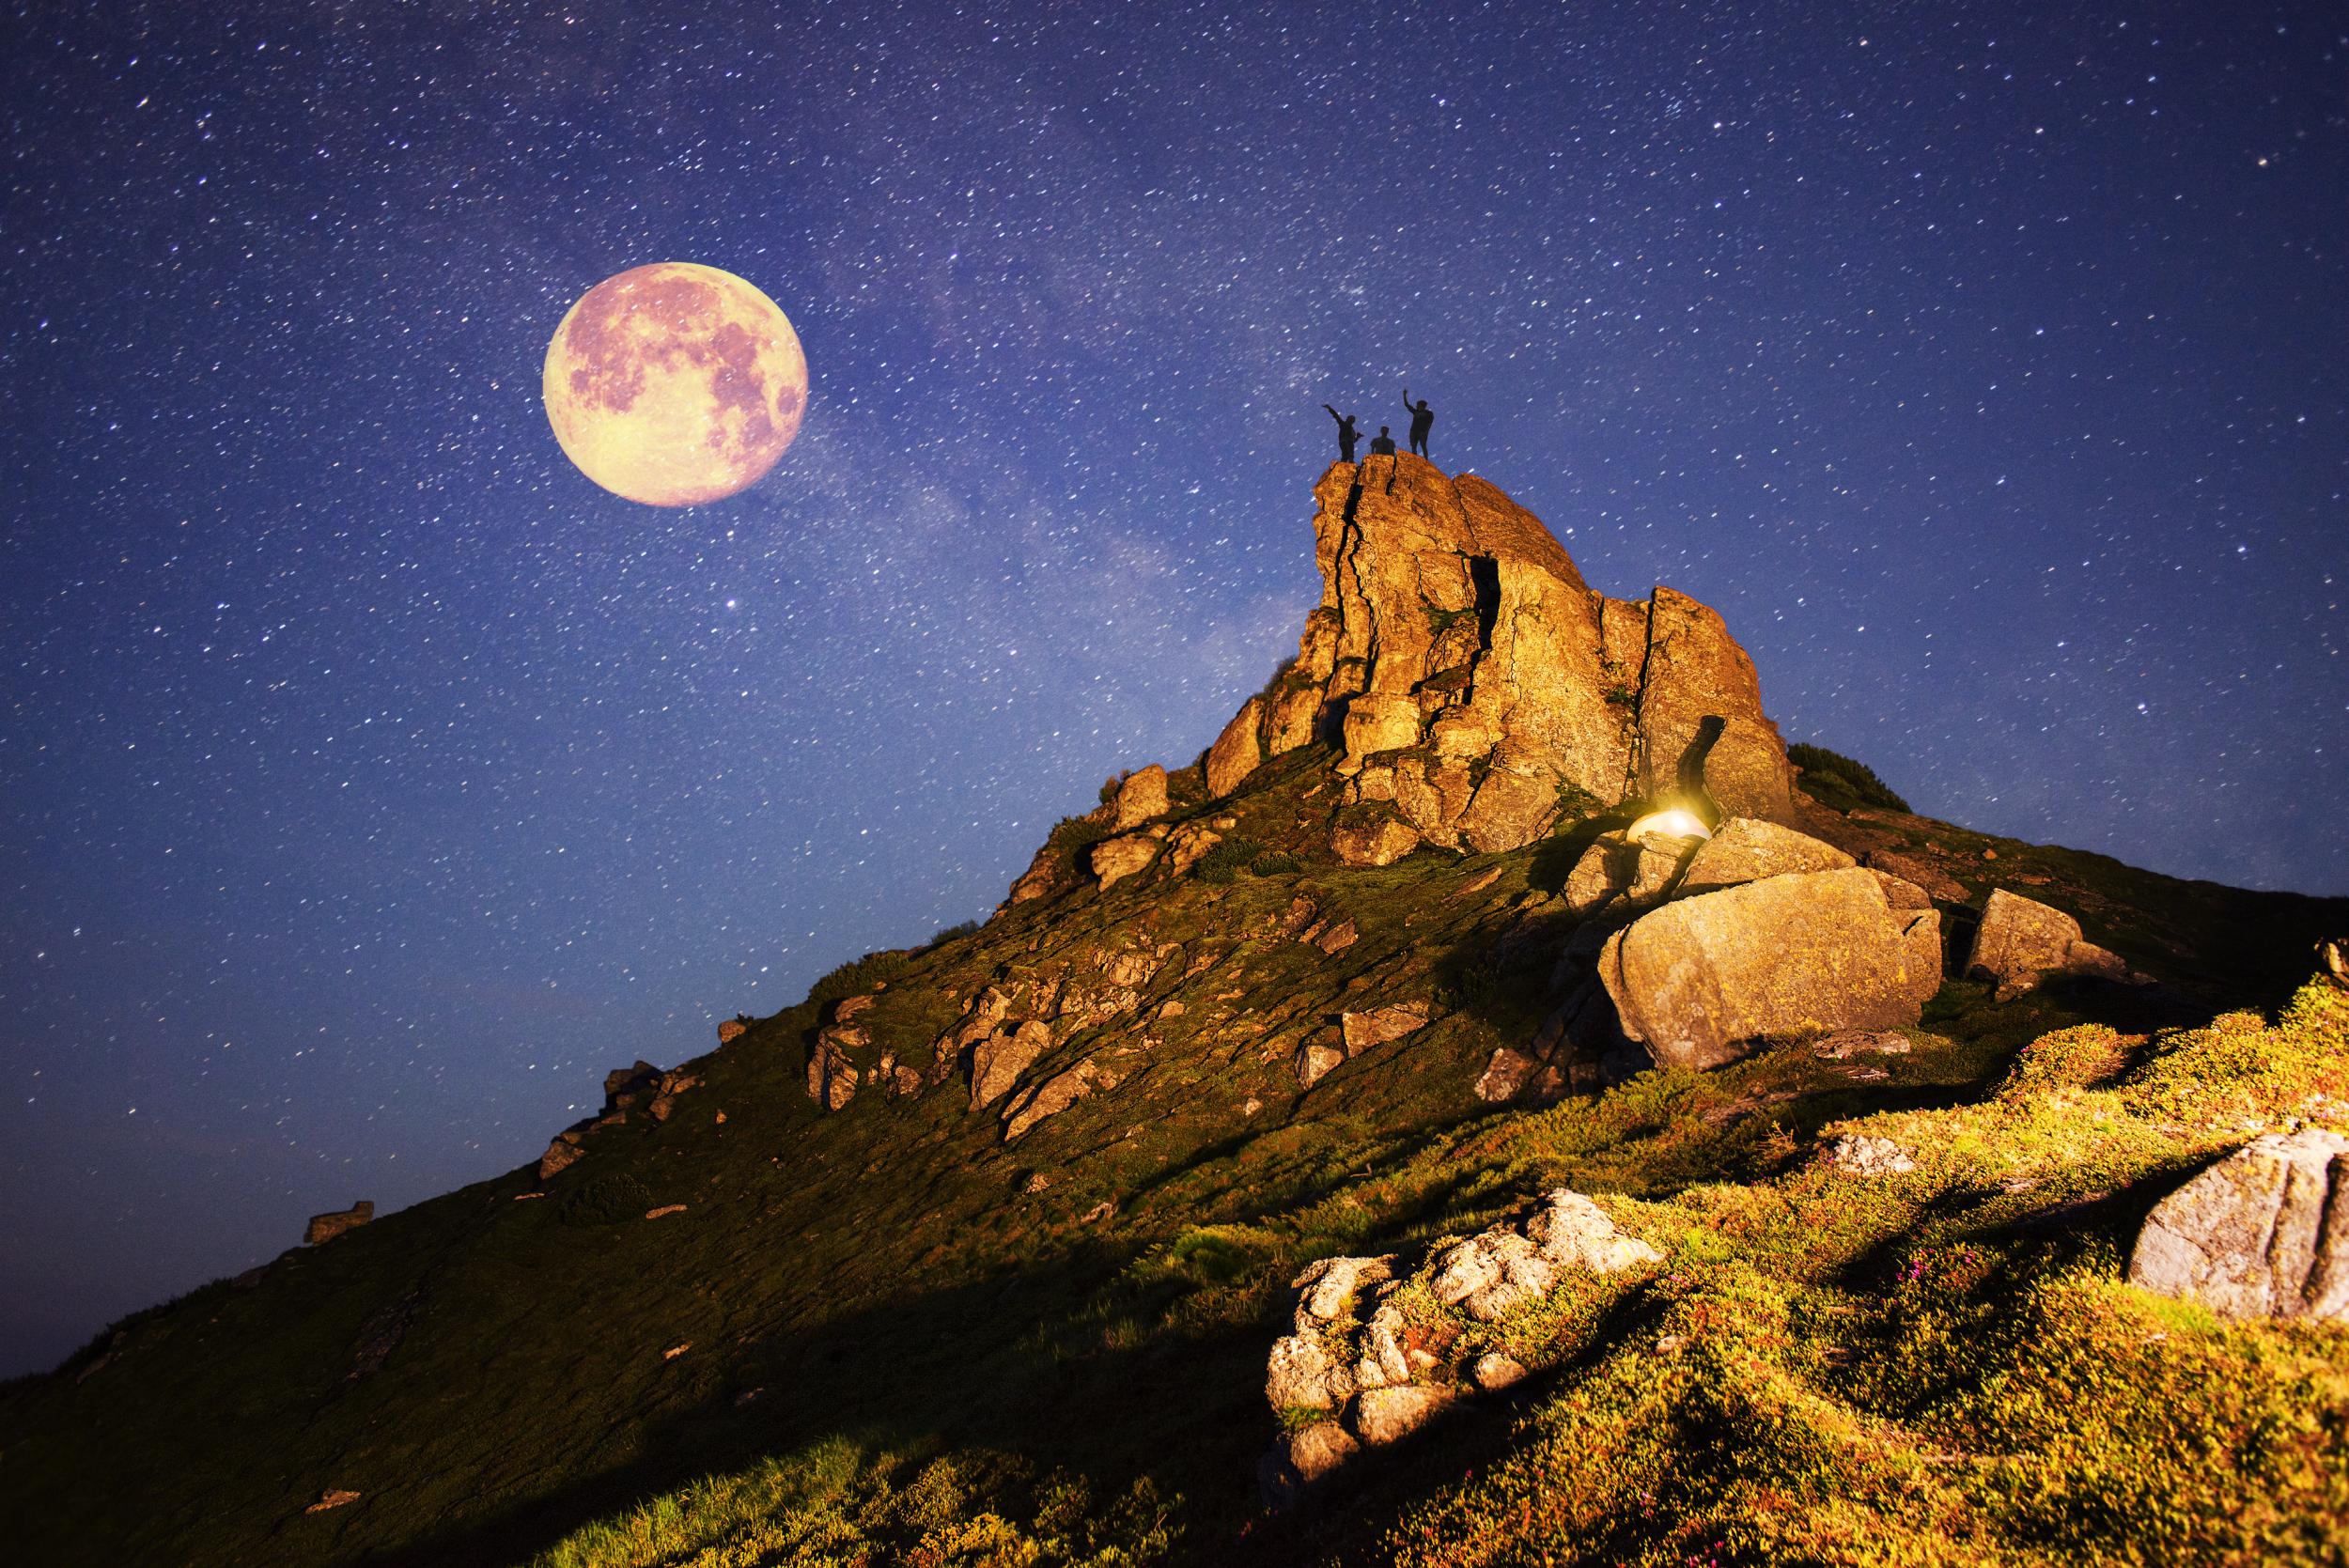 Viewing the night sky amid Sedona's dramatic, rock scenery